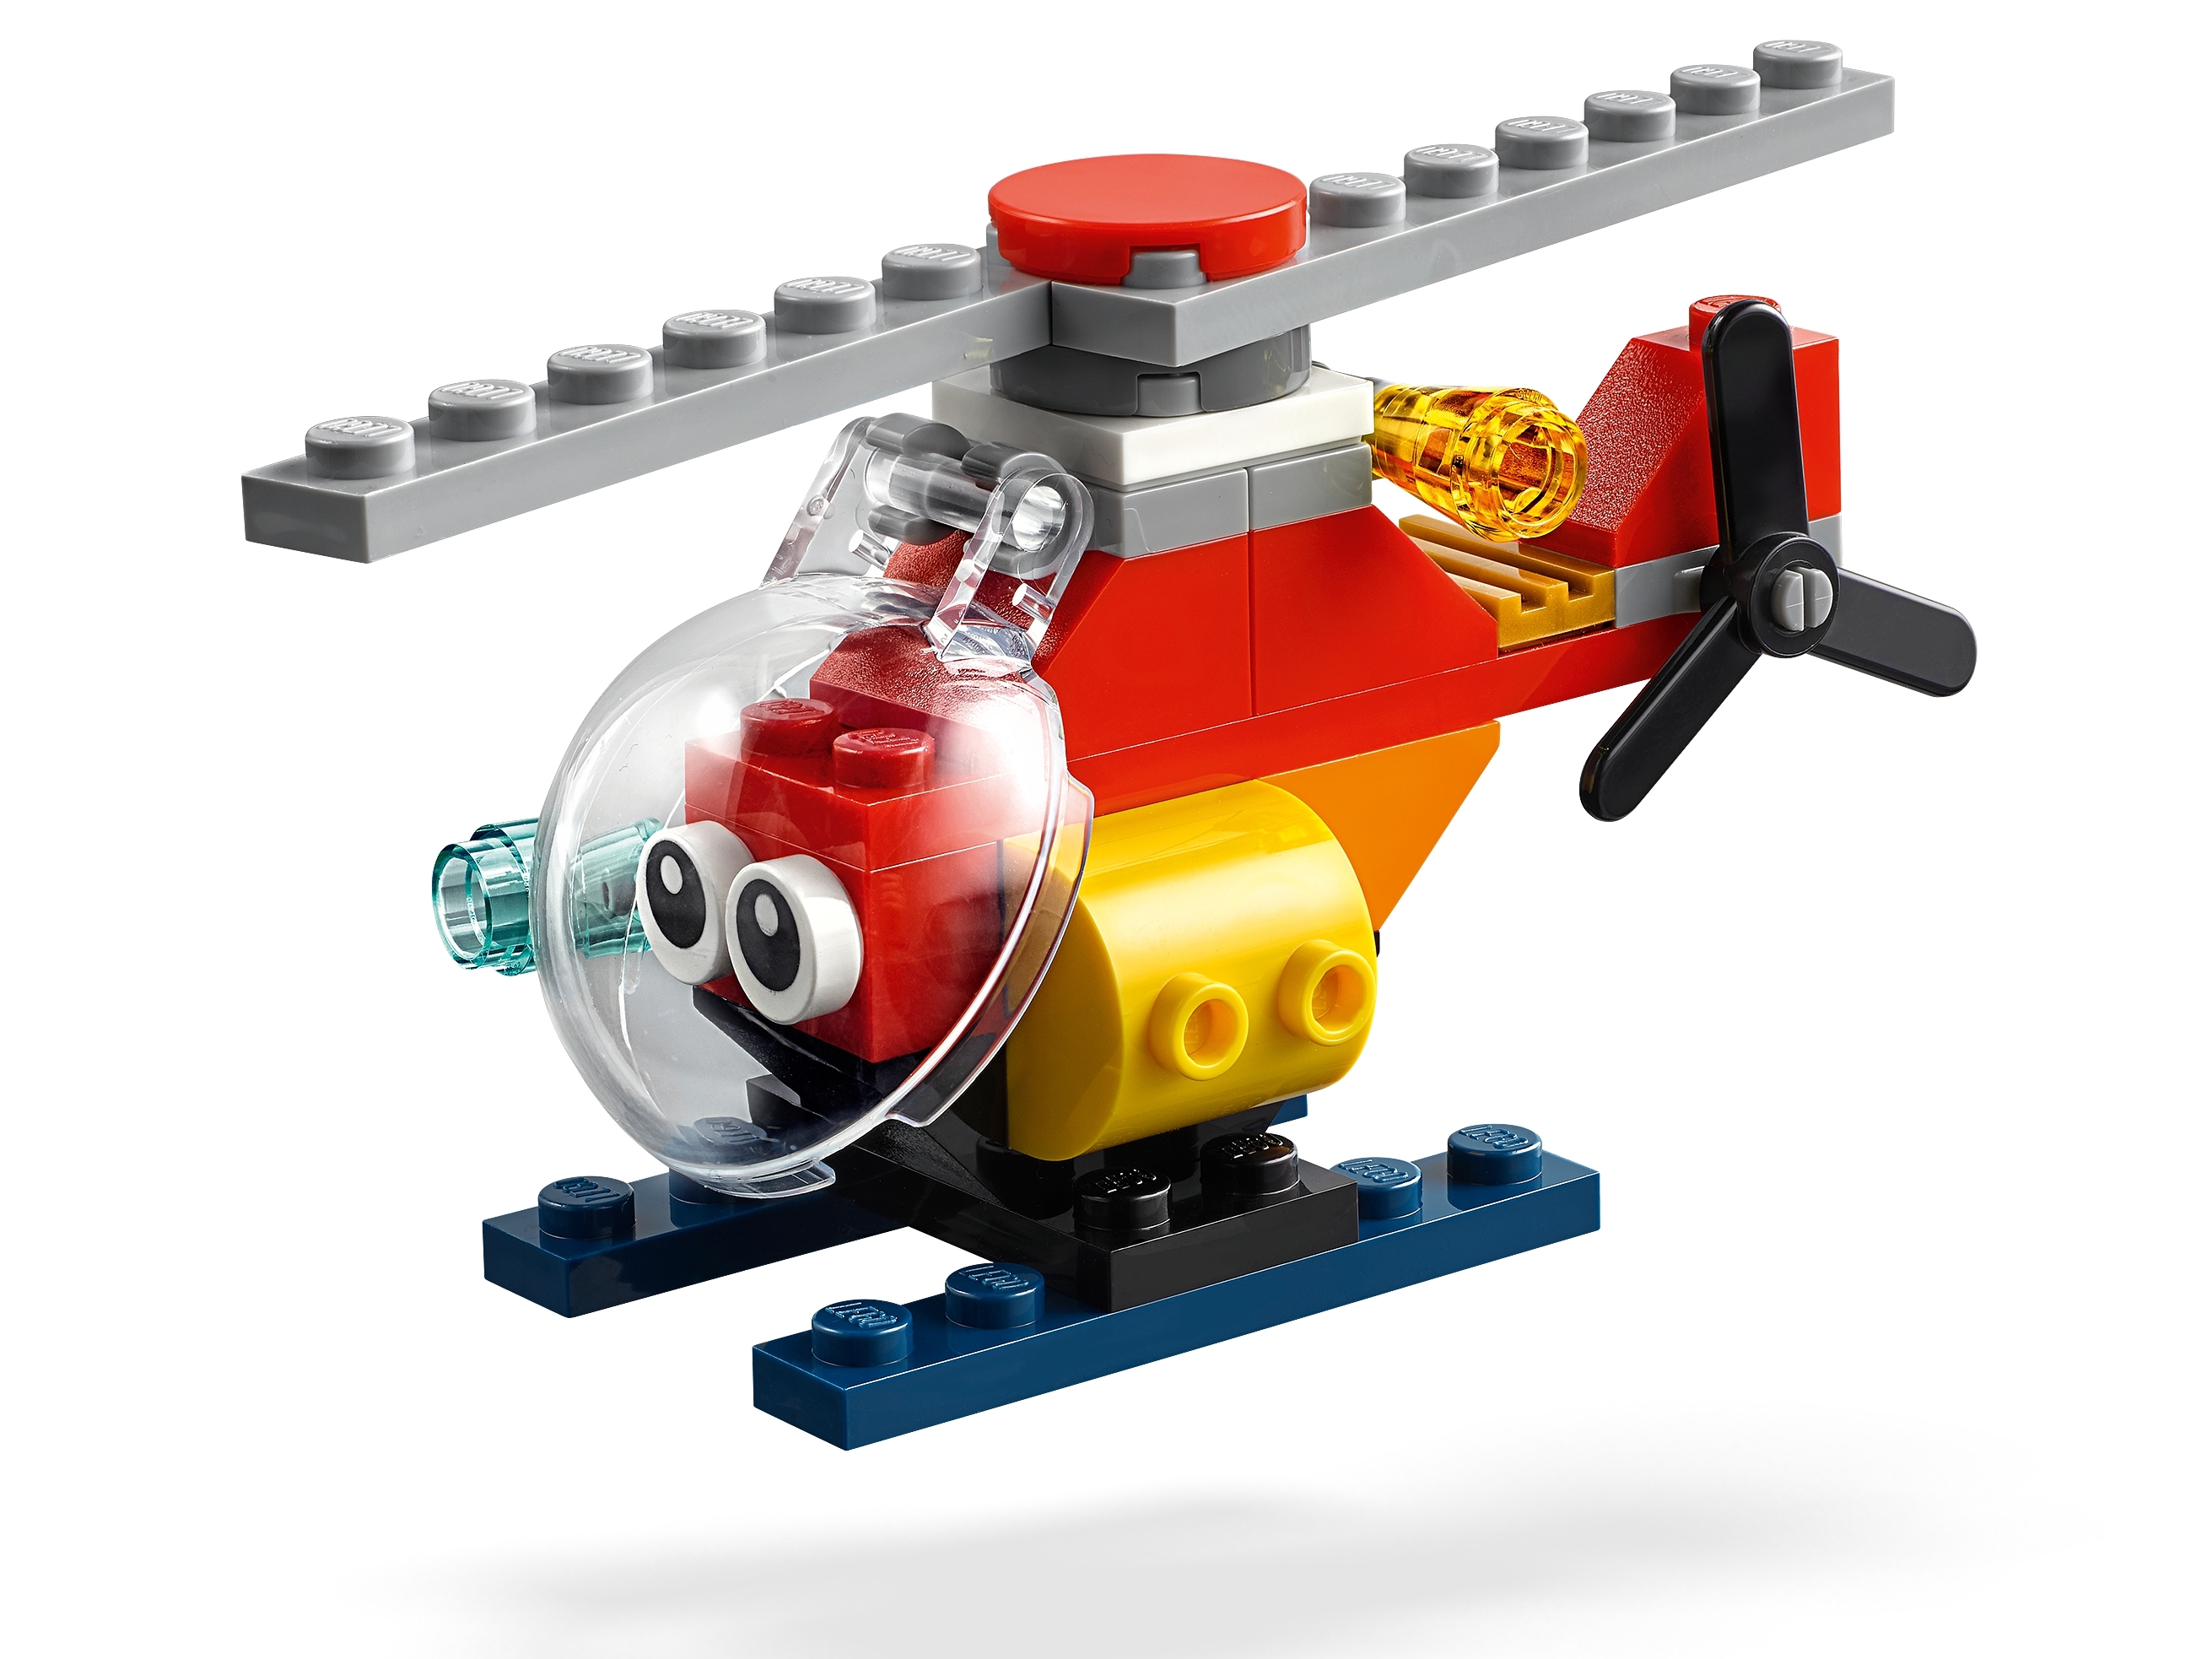 for sale online LEGO Bricks and Eyes Set 11003